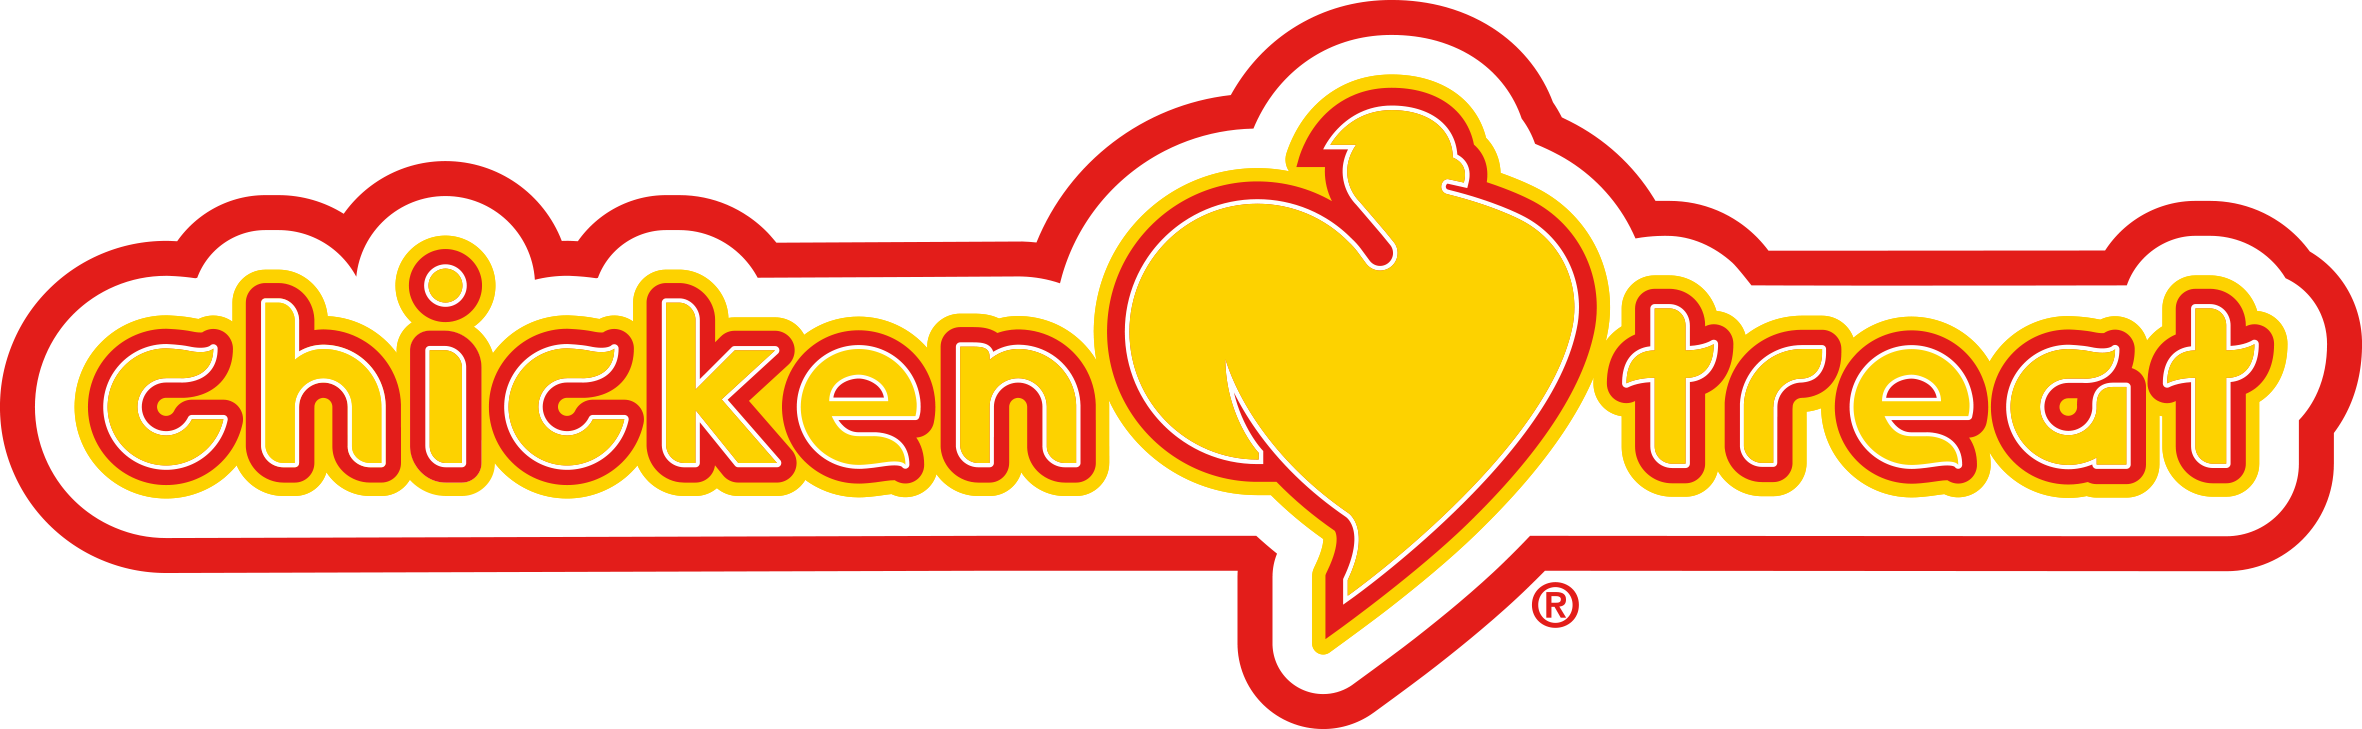 Chicken treat logo